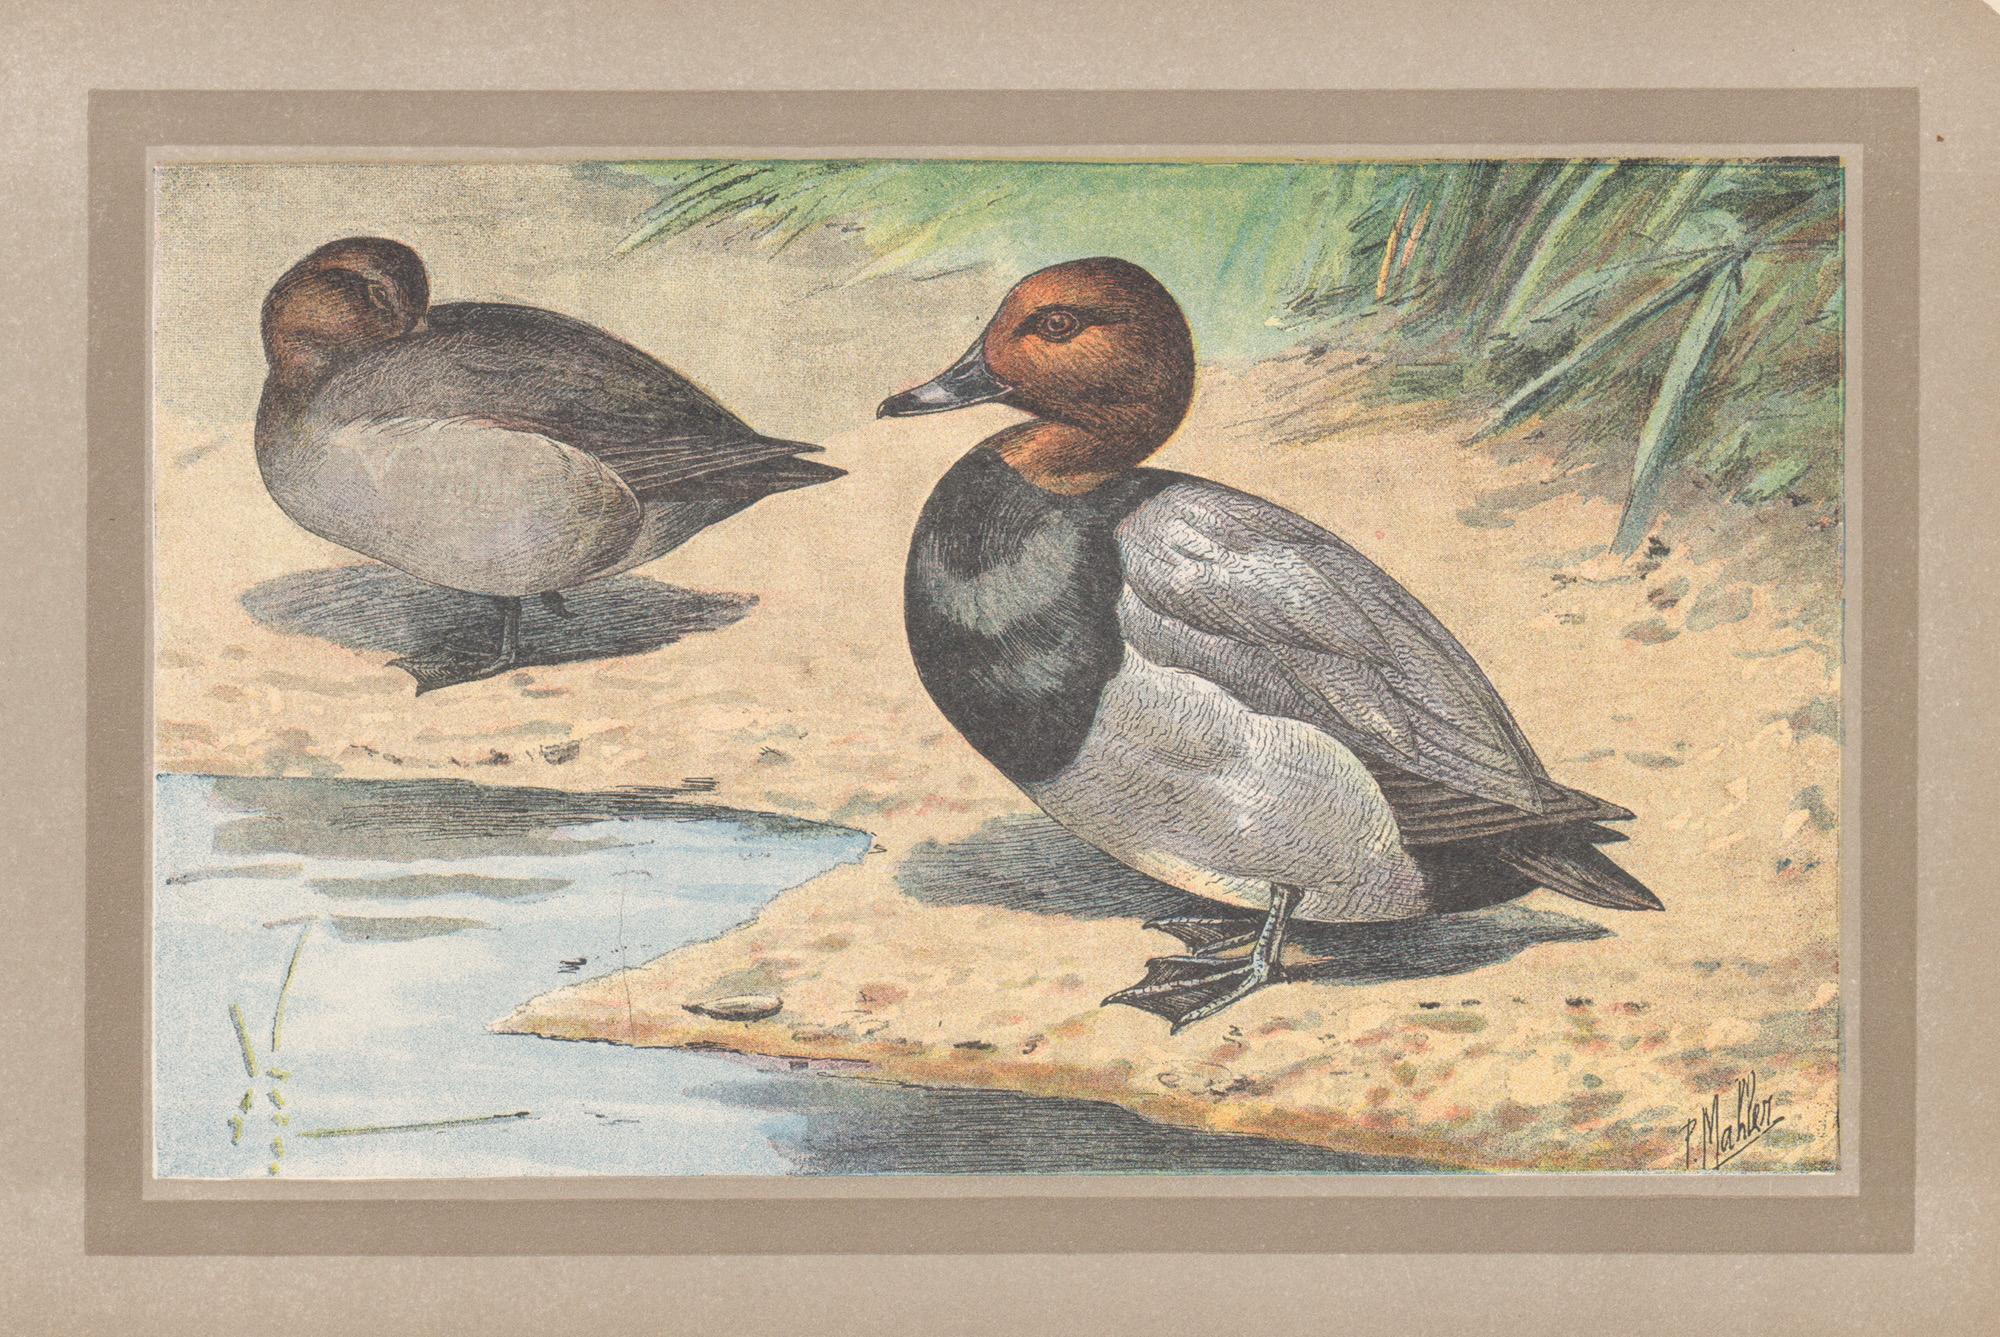 P. Mahler Animal Print - Common Pochard, French antique bird duck art illustration print